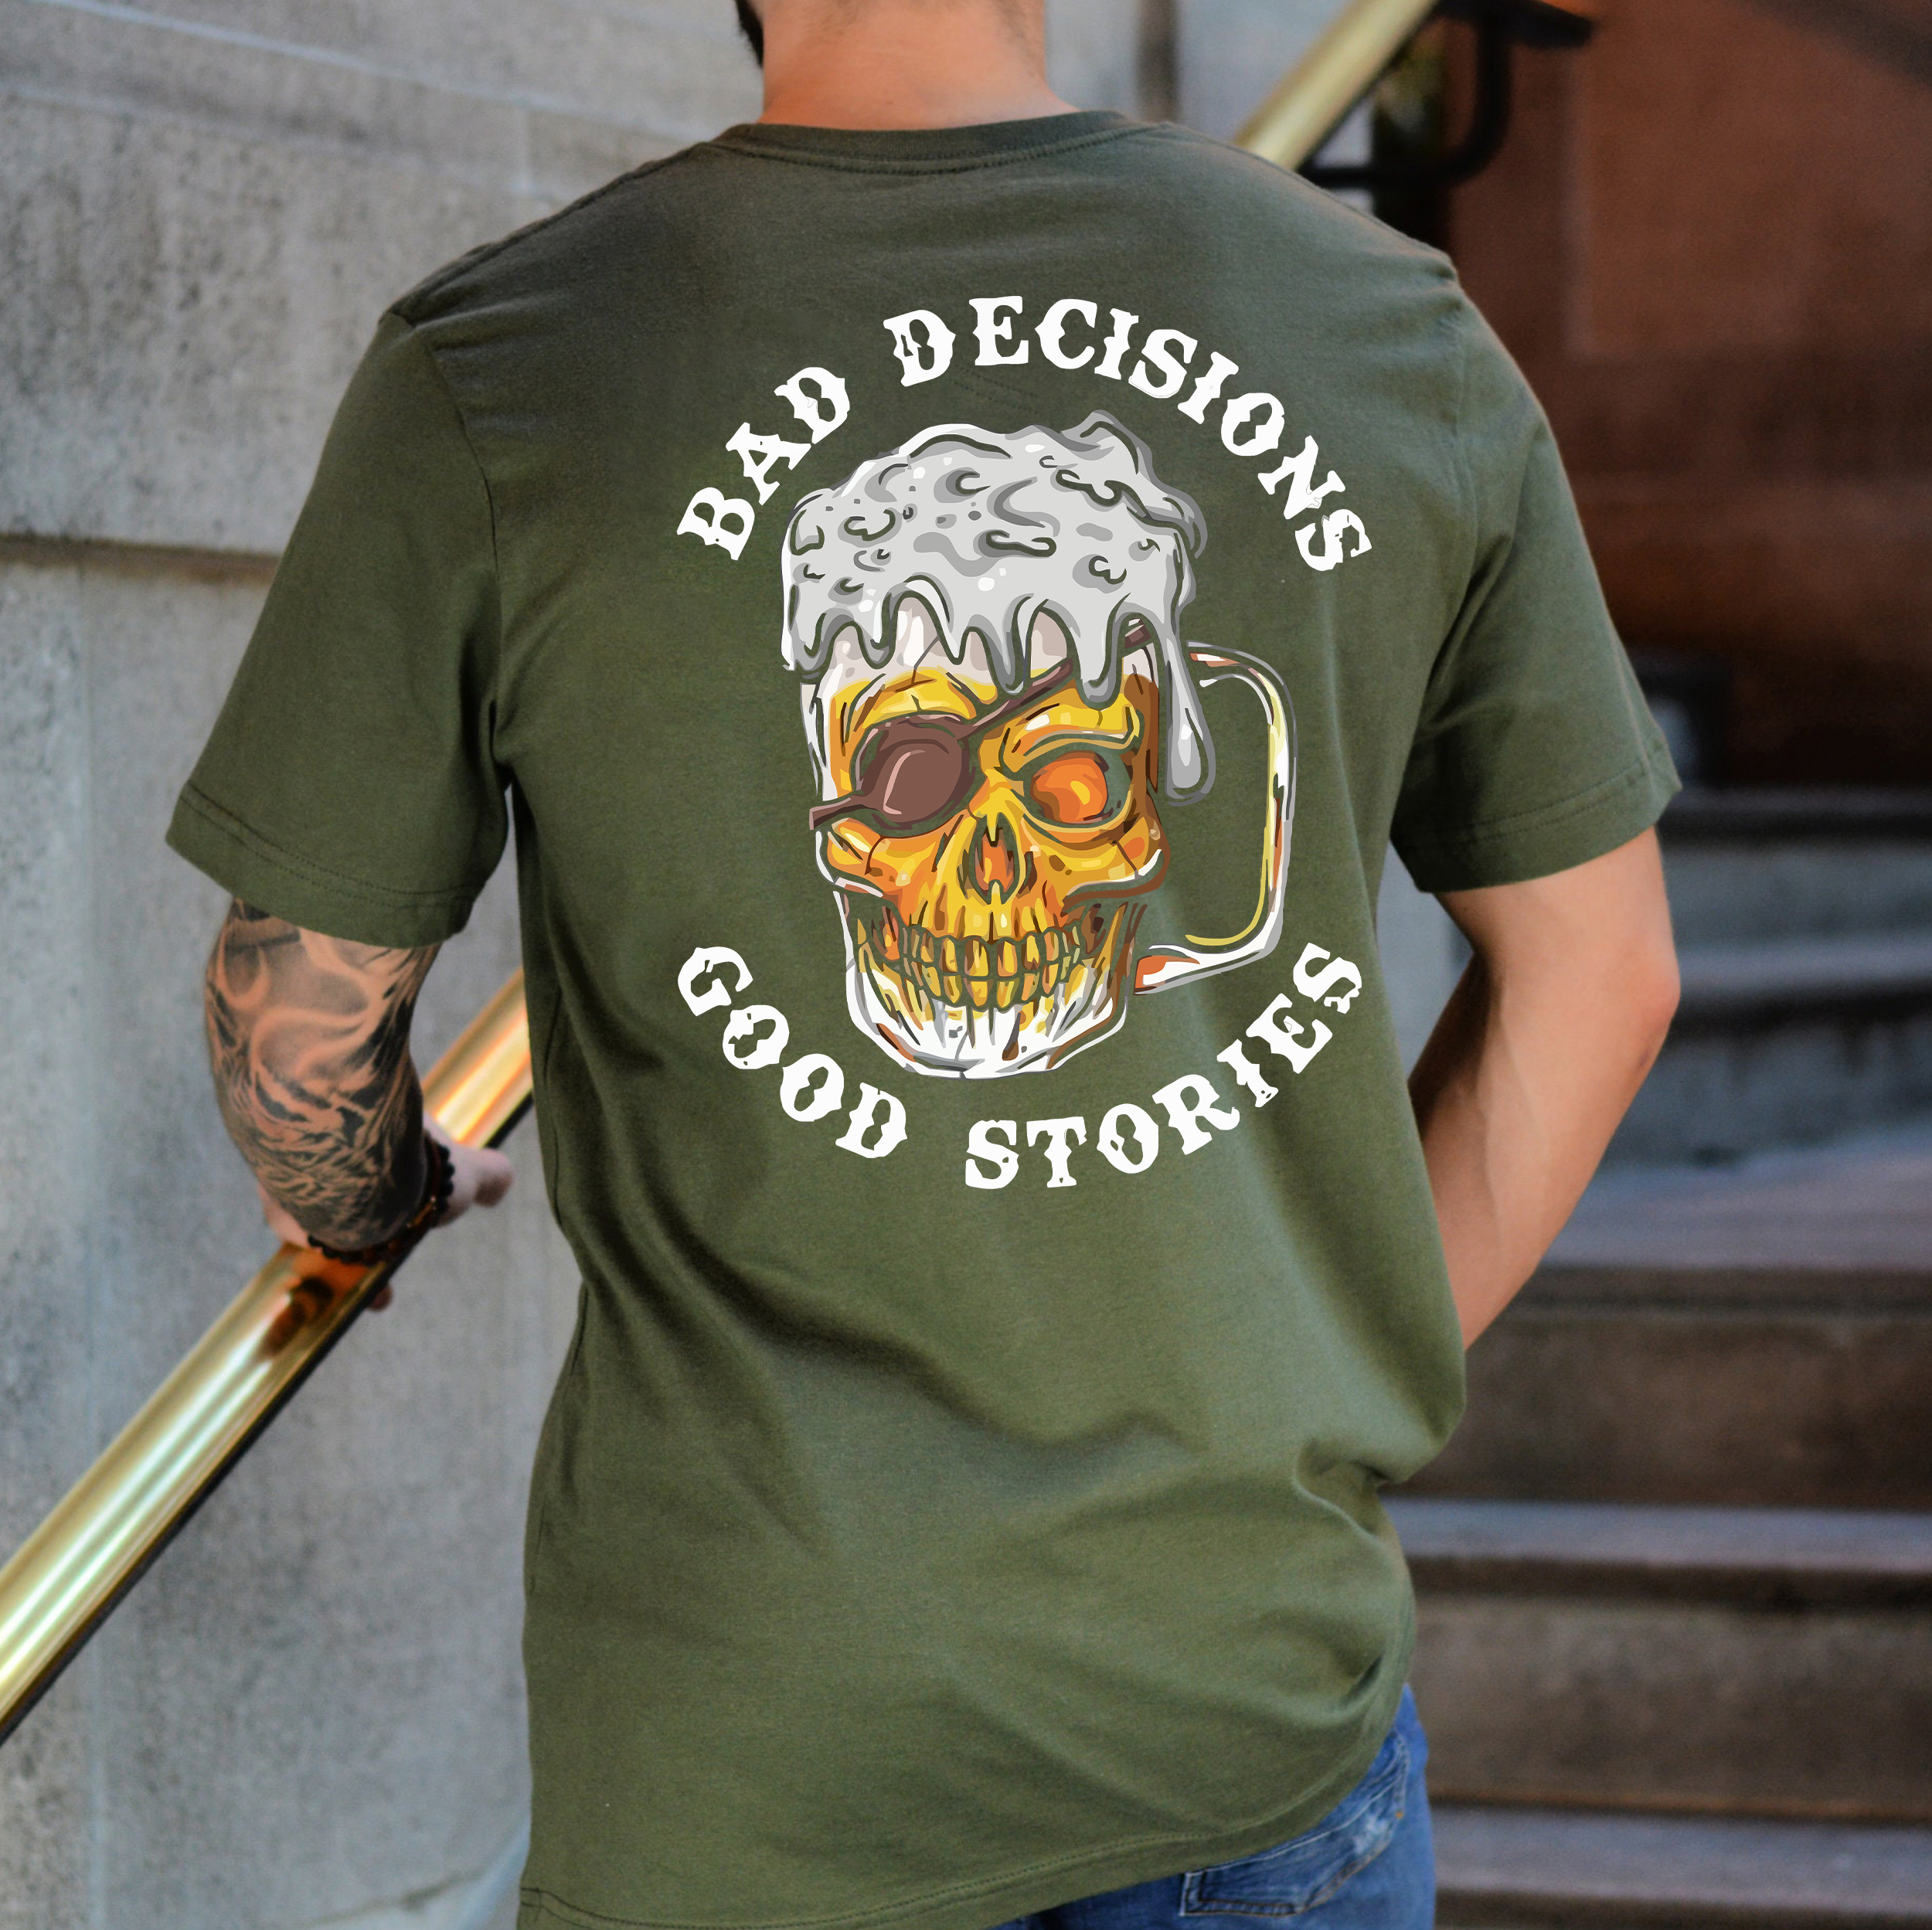 BAD DECISIONS GOOD STORIES Black Print T-Shirt